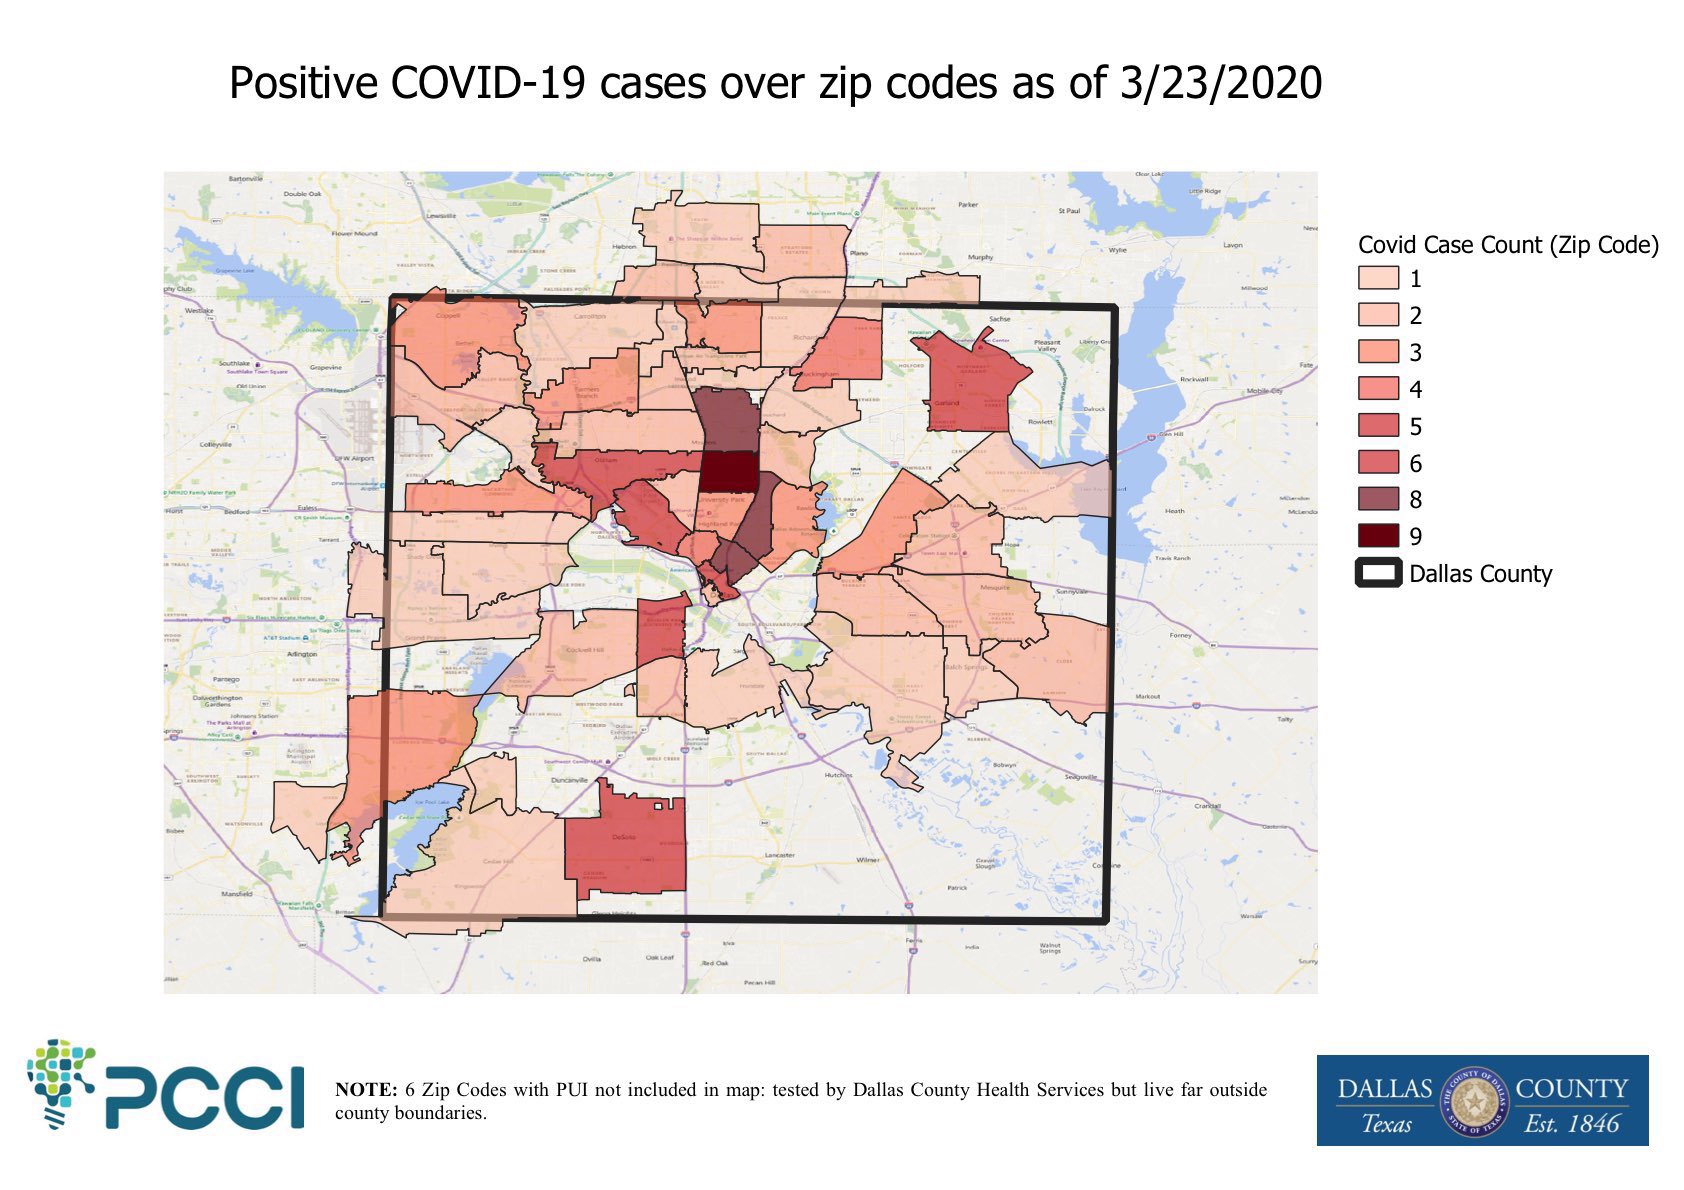 COVID-19-Map-Zip-Codes